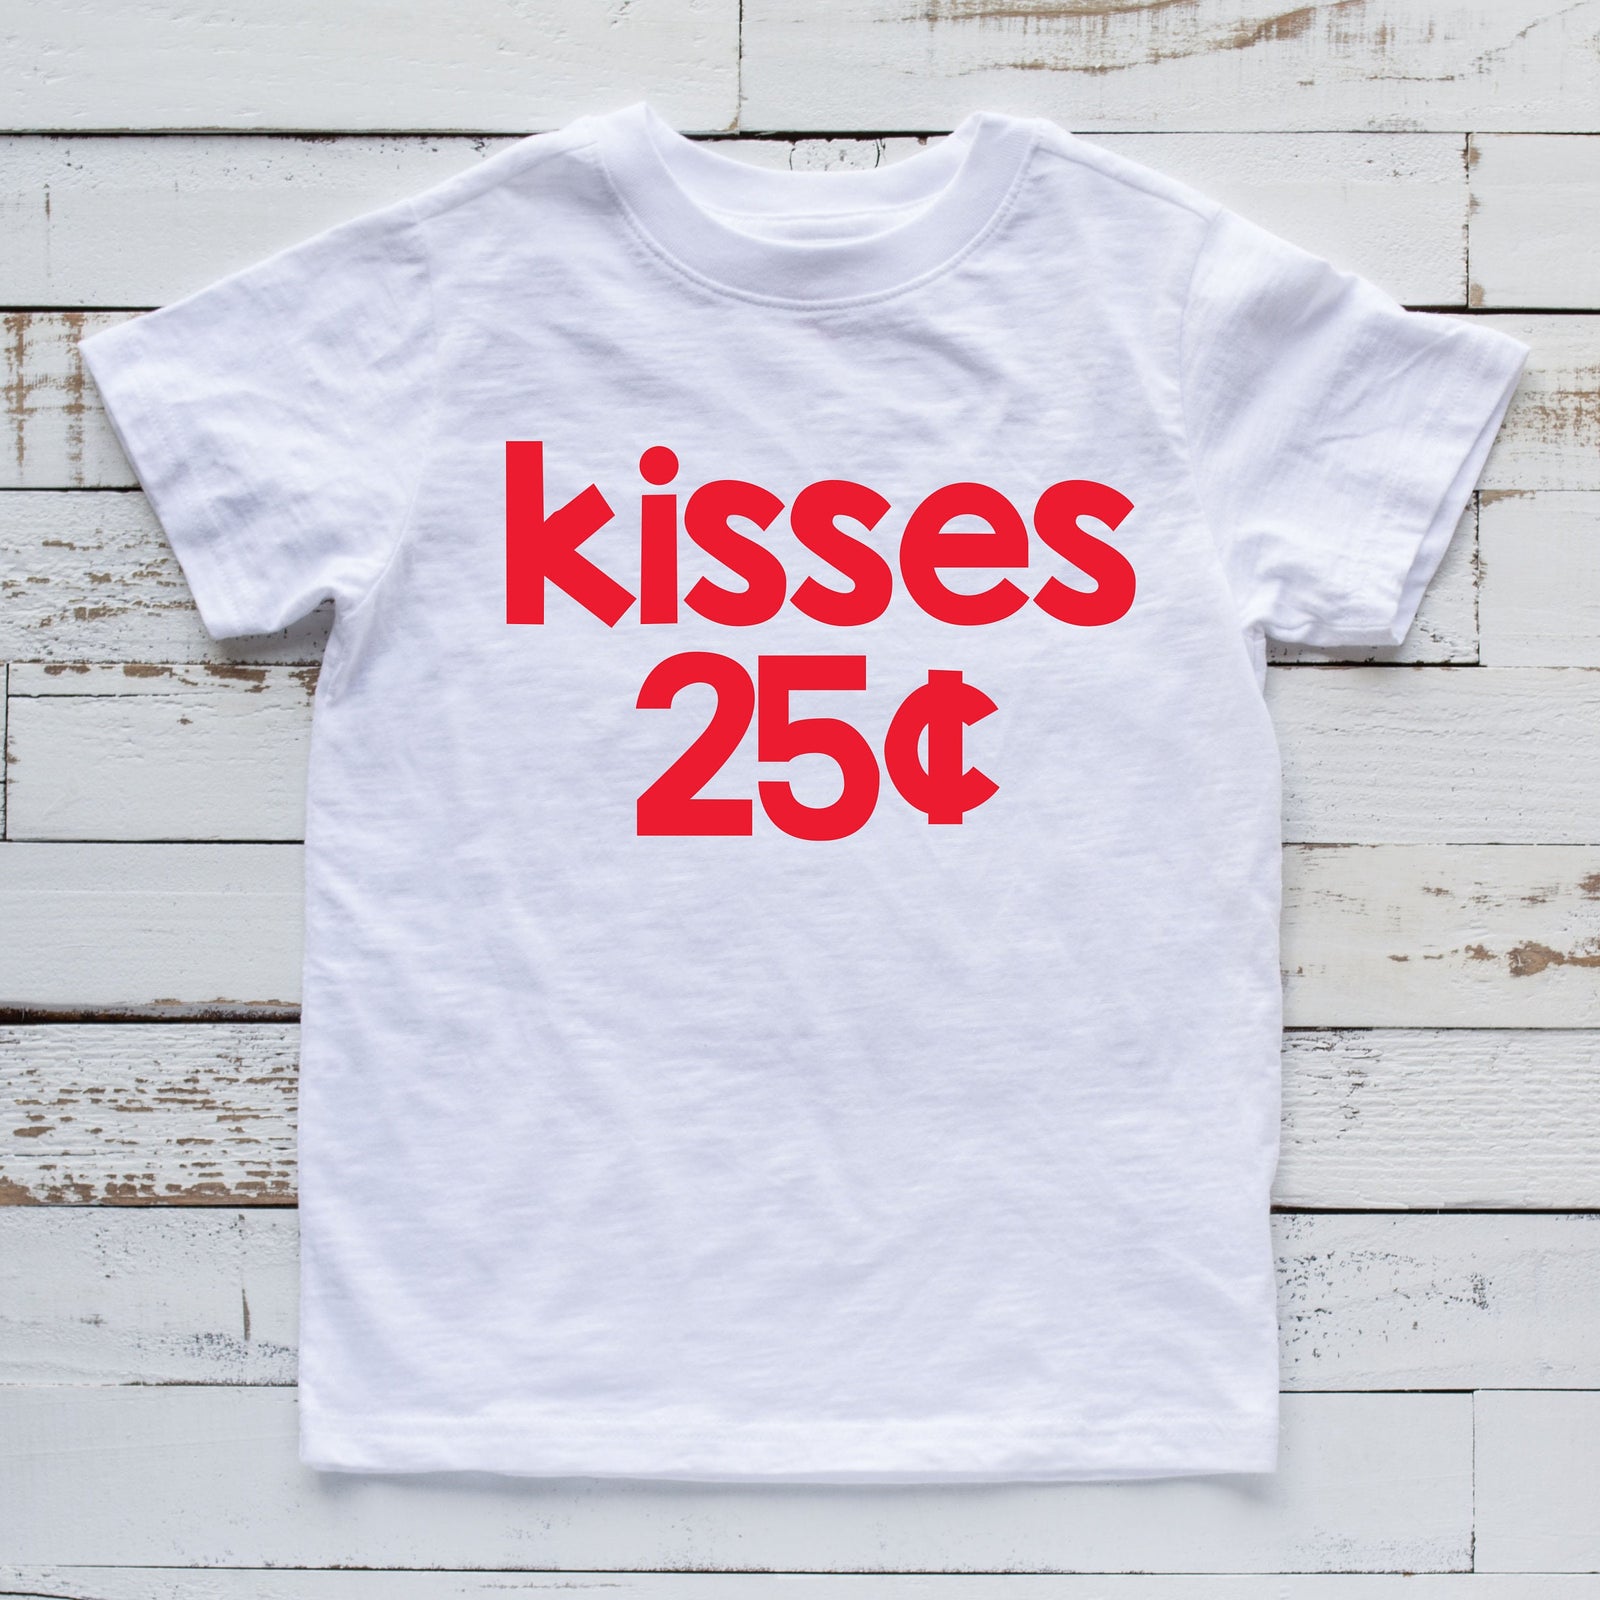 Kisses 25 Cents T Shirt - Valentine Shirt for Kids - Cute Kisses Shirt